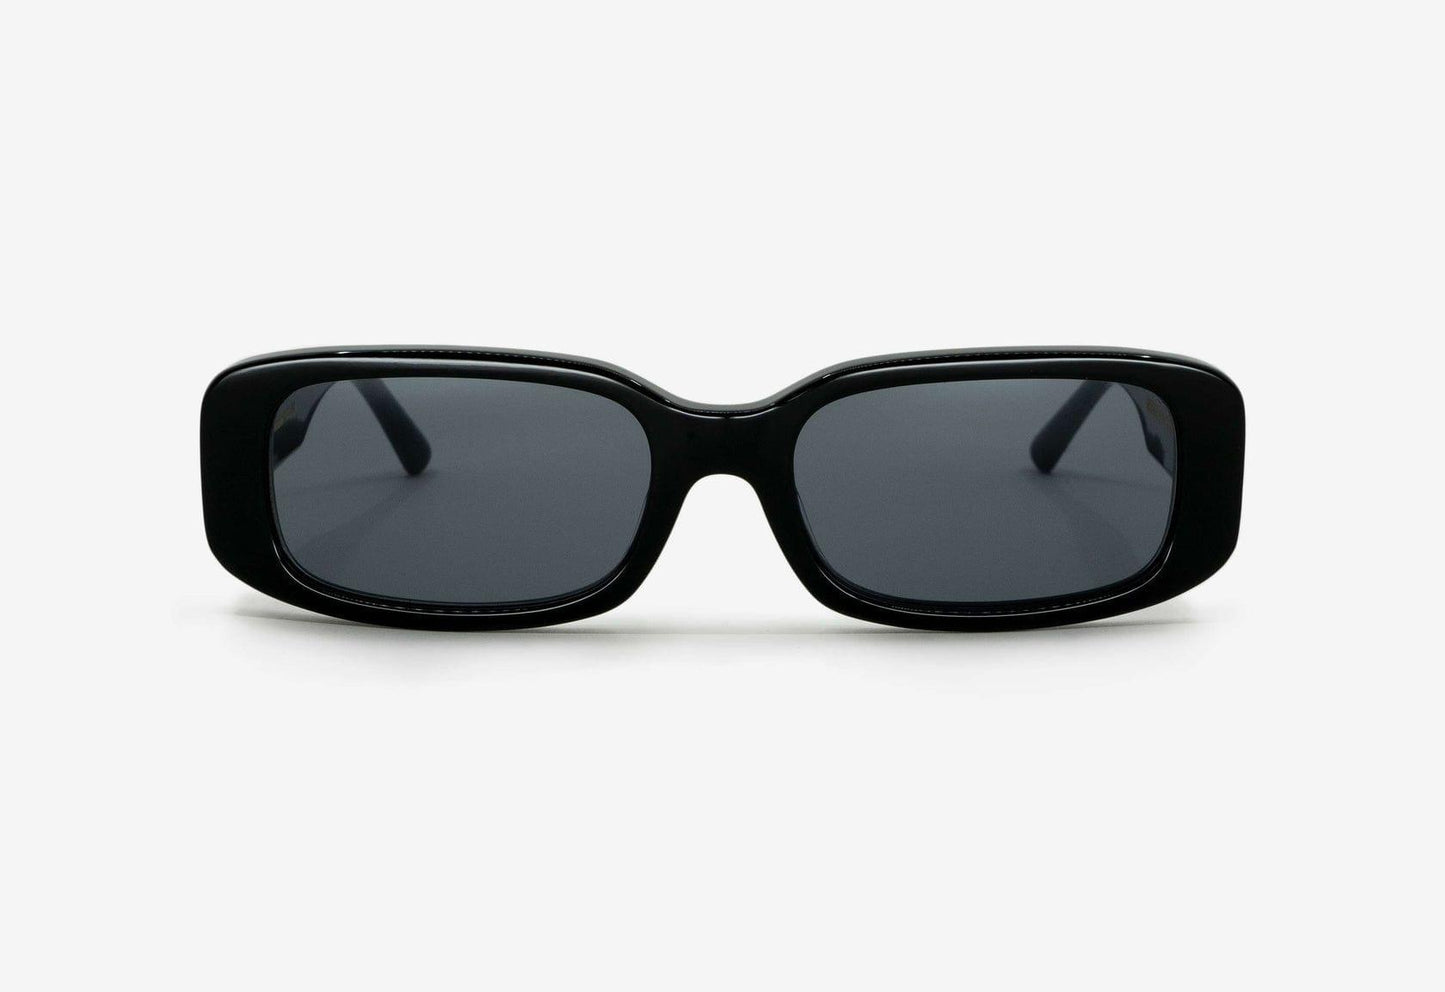 ROXIE, Rectangular sunglasses for men and women grey lens UV400 protection